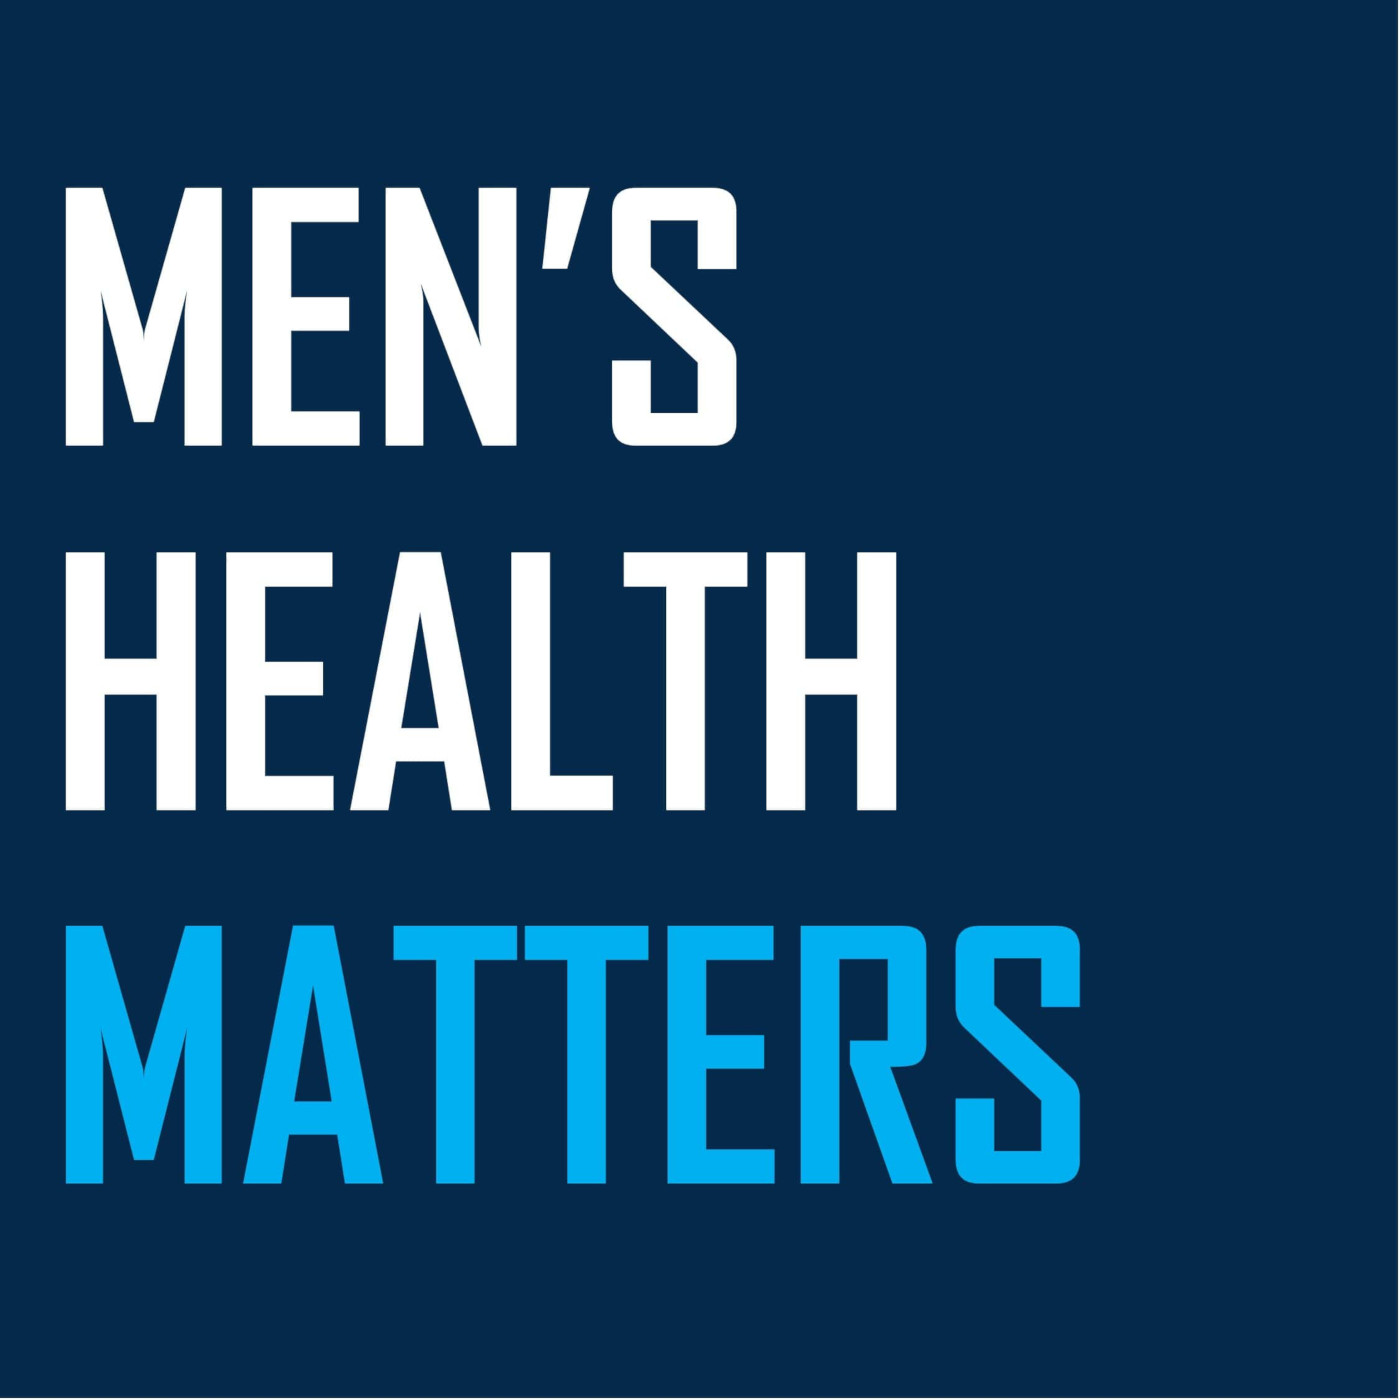 20210318161808-mens-health-matters1400x1400-11